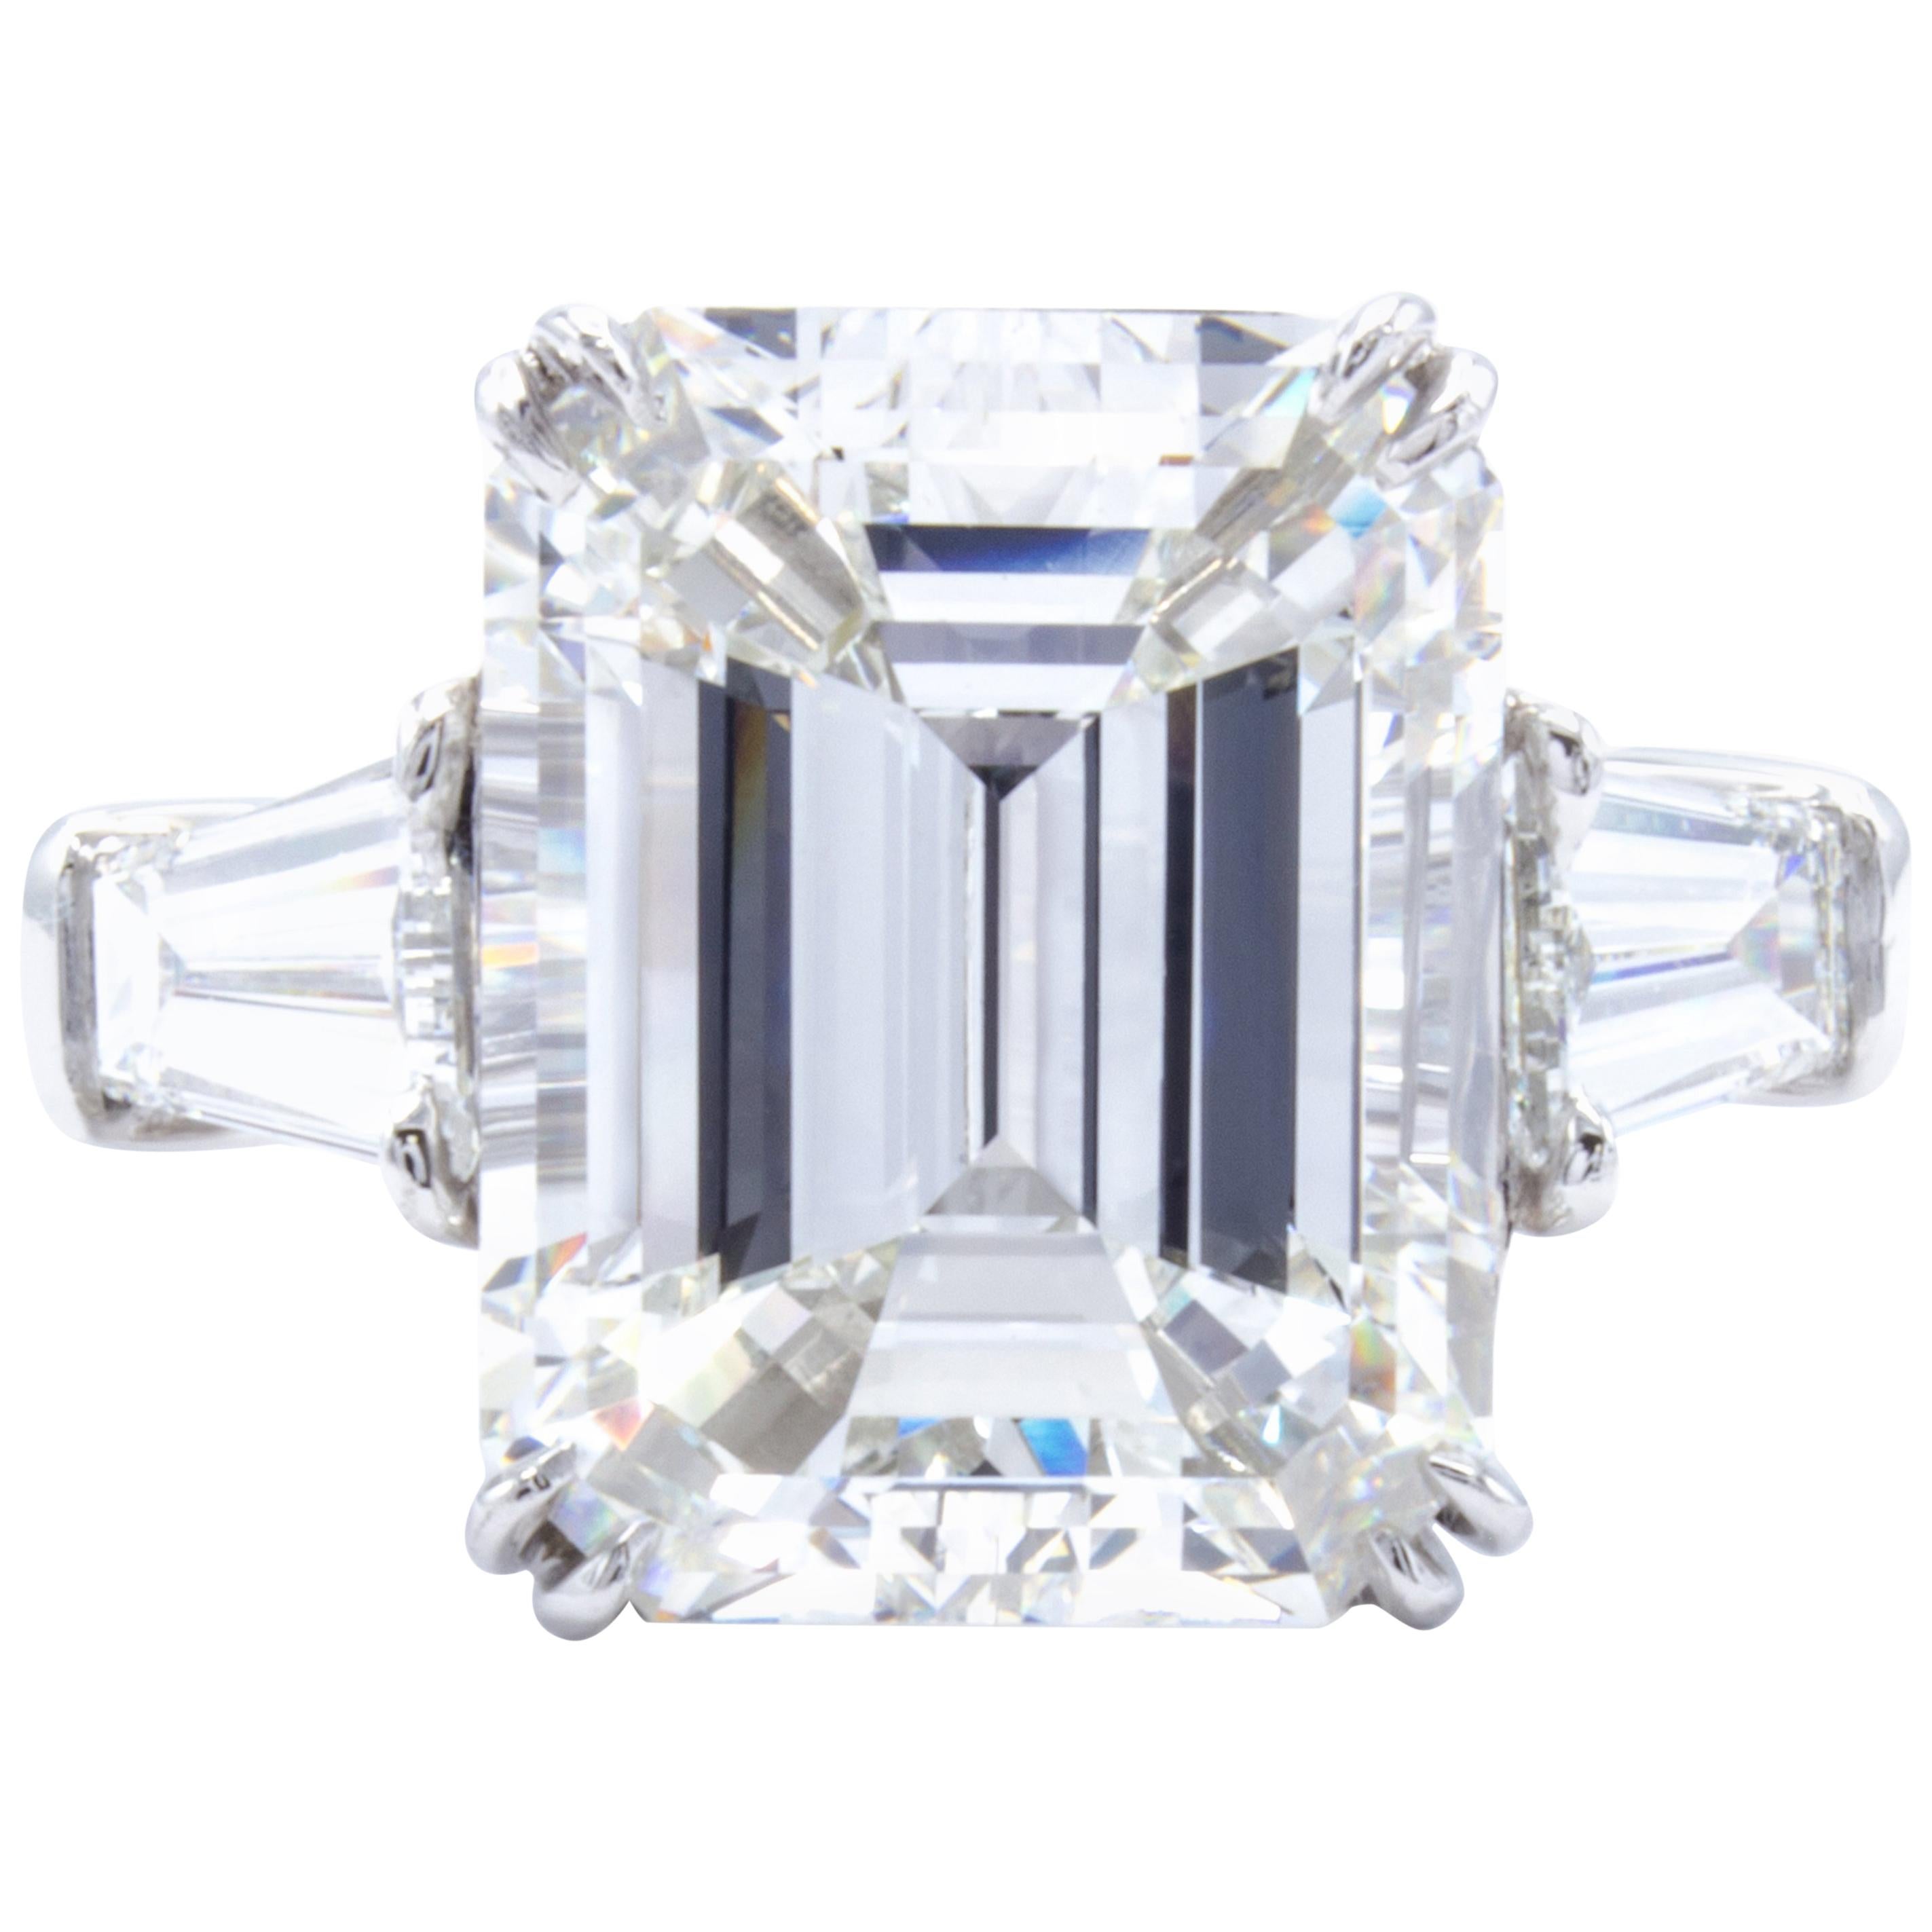 David Rosenberg 7.07 Carat Emerald Cut GIA Three-Stone Diamond Engagement Ring